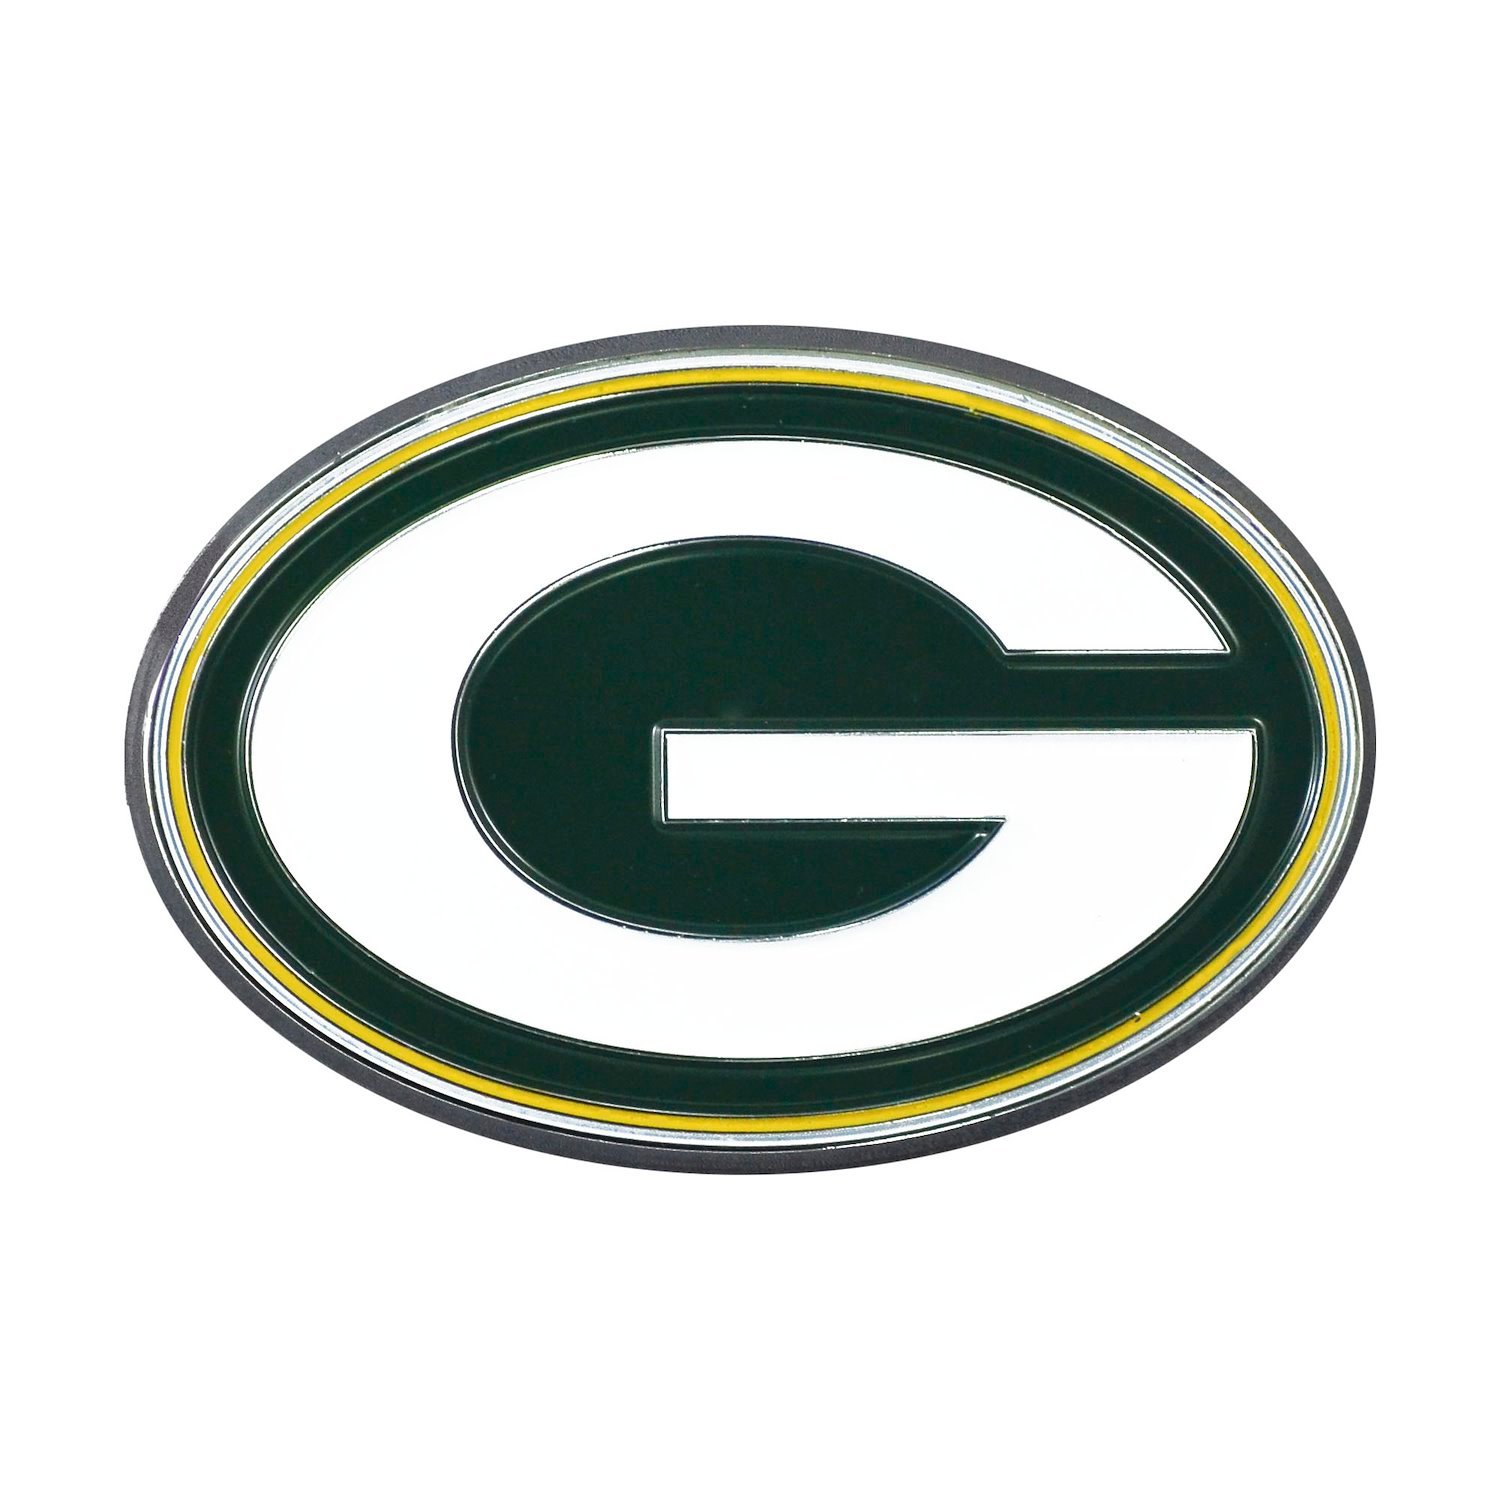 22560 3D Metal Emblem, Green Bay Packers [Green]